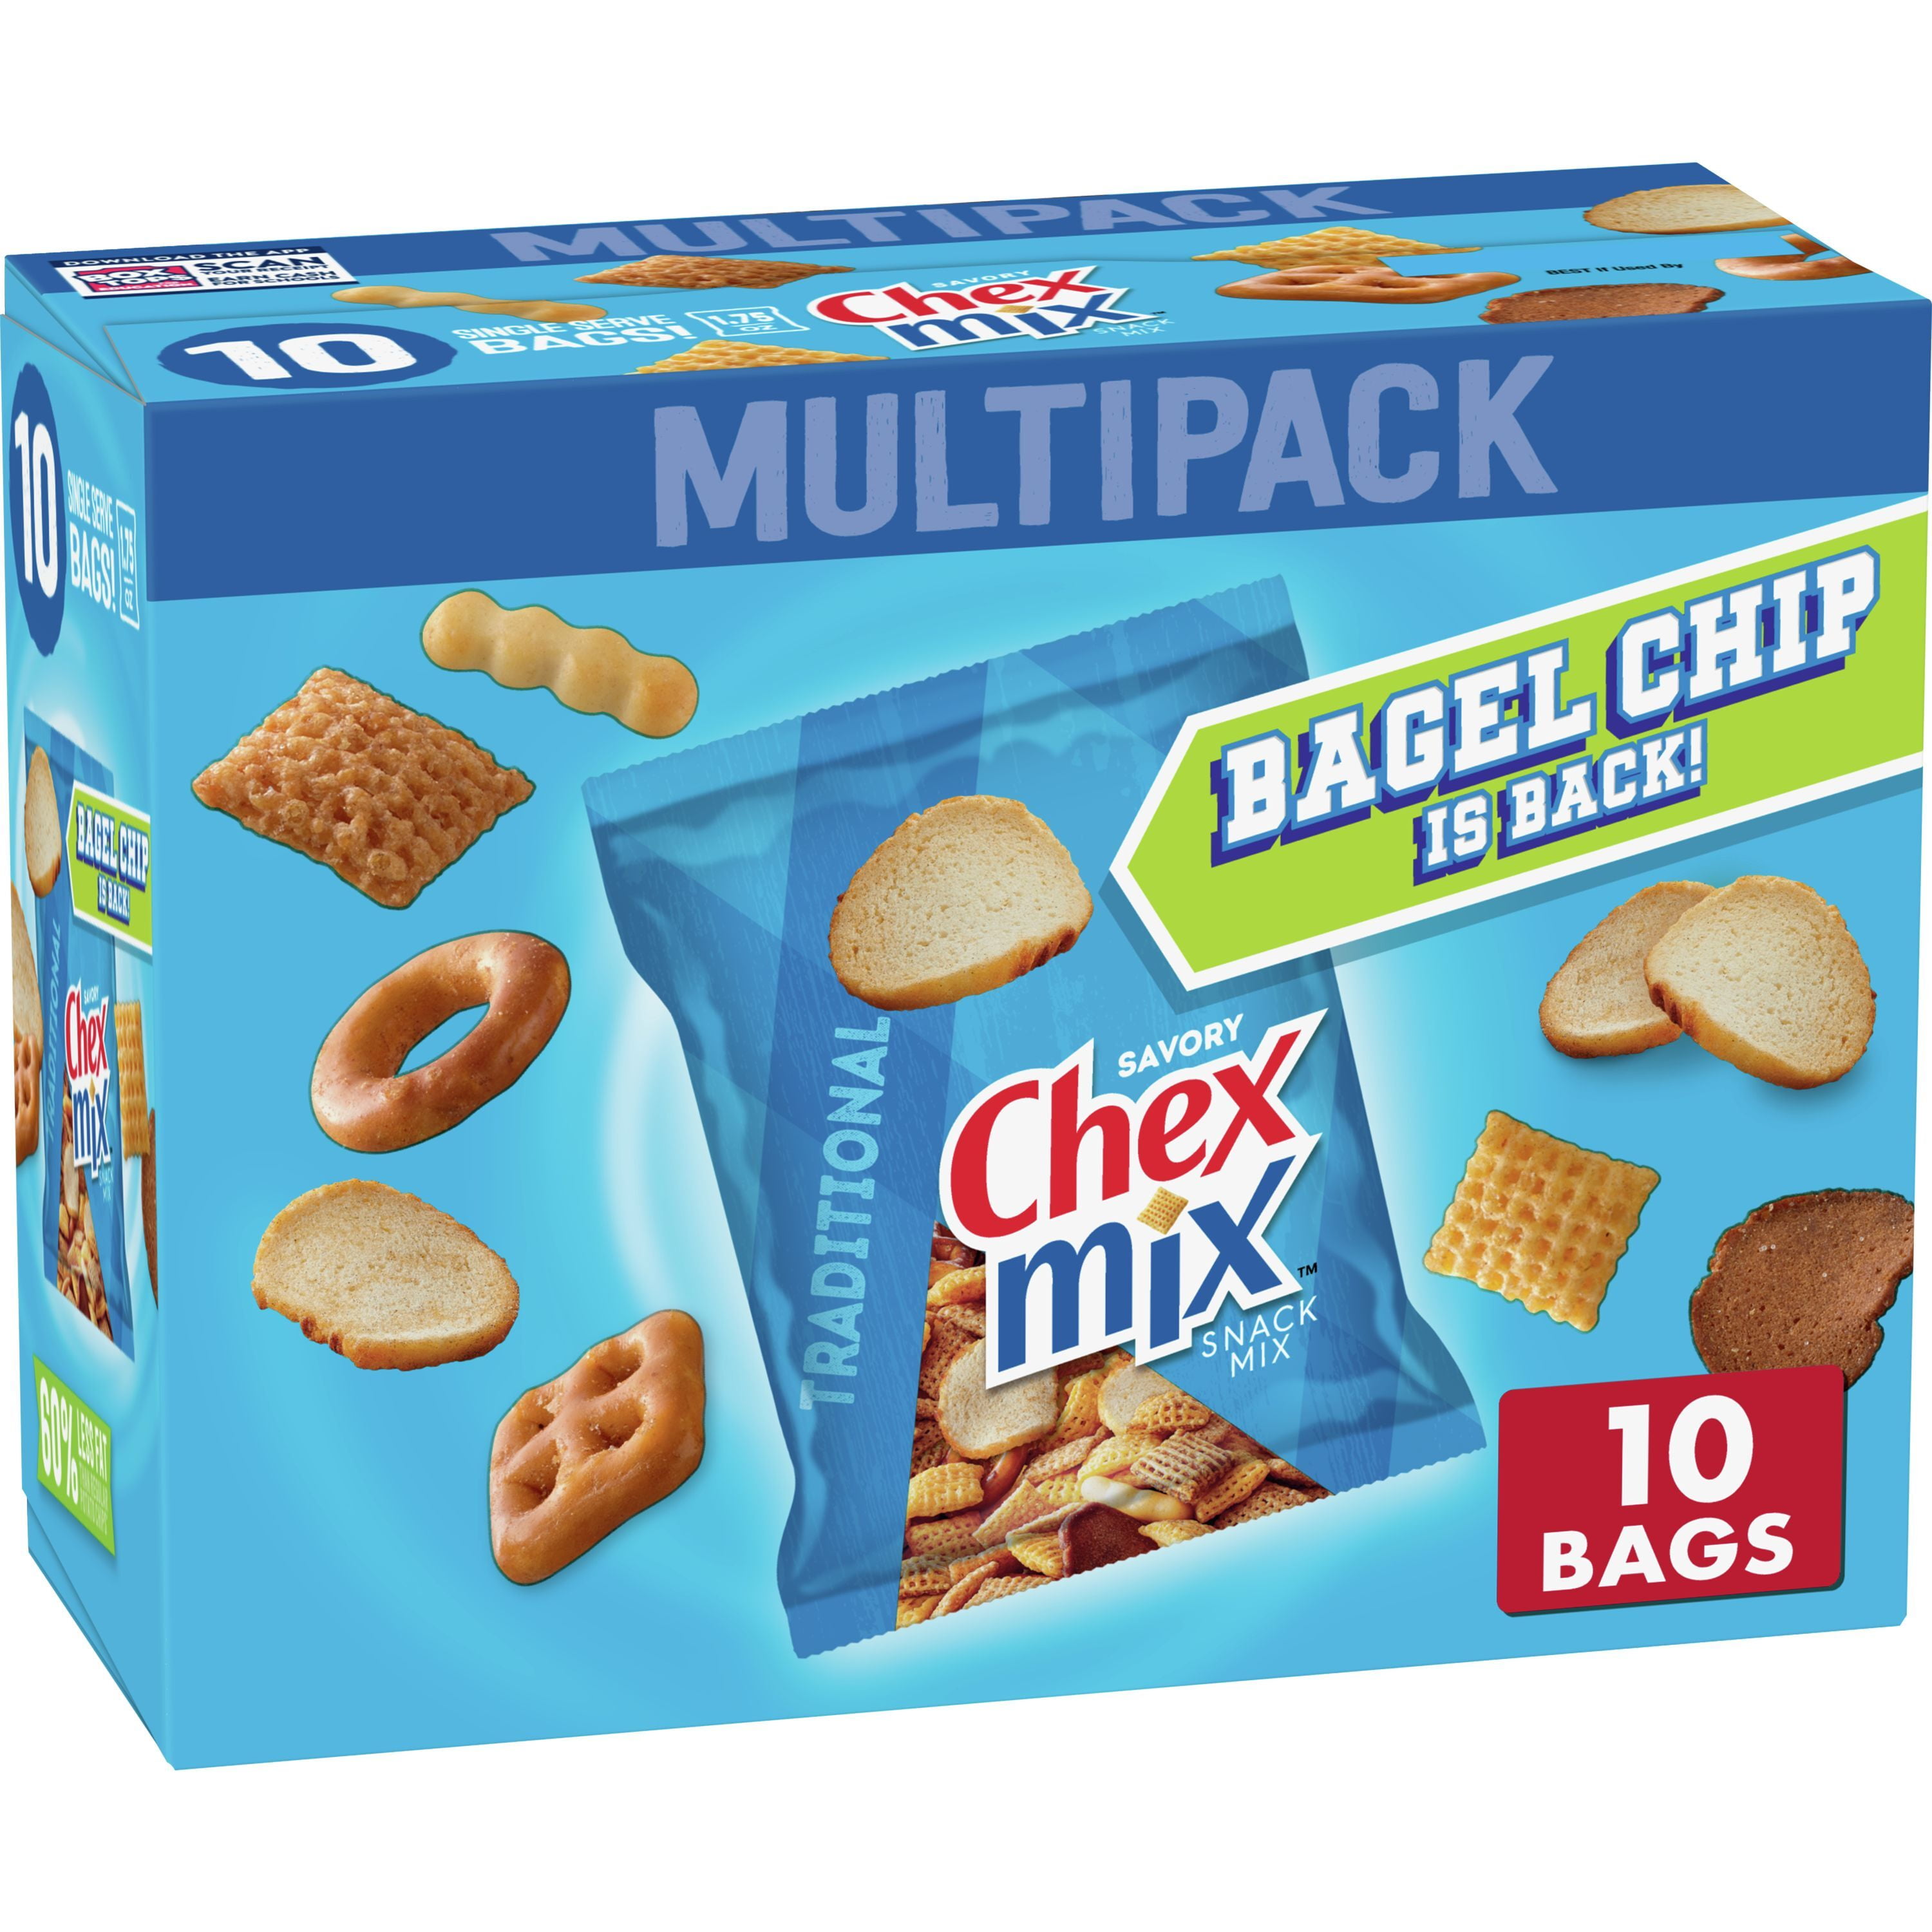 Chex Mix Snack Party Mix, Multipack, Pub Mix Snack Bags, 10 ct - Walmart.com